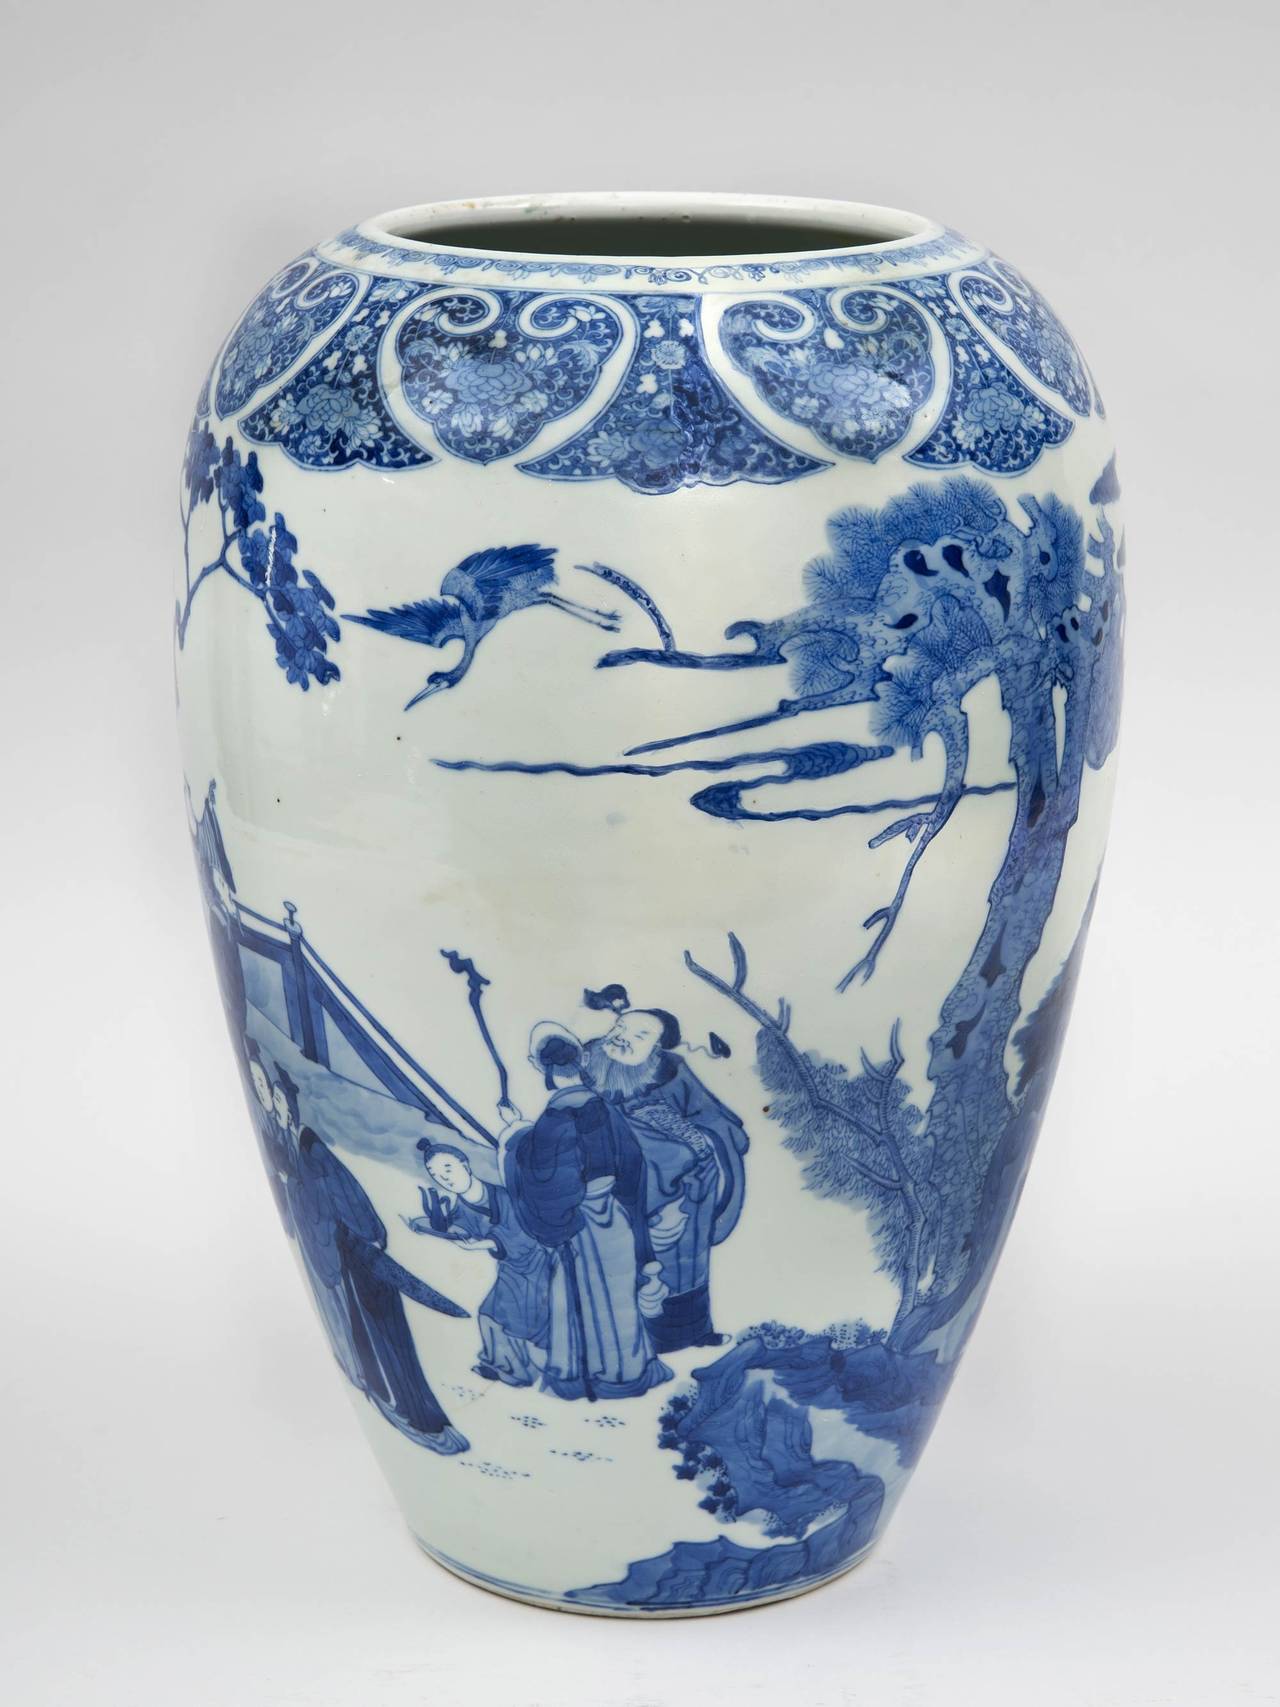 Polychromed Large Chinese Blue and White Vase, circa 1860